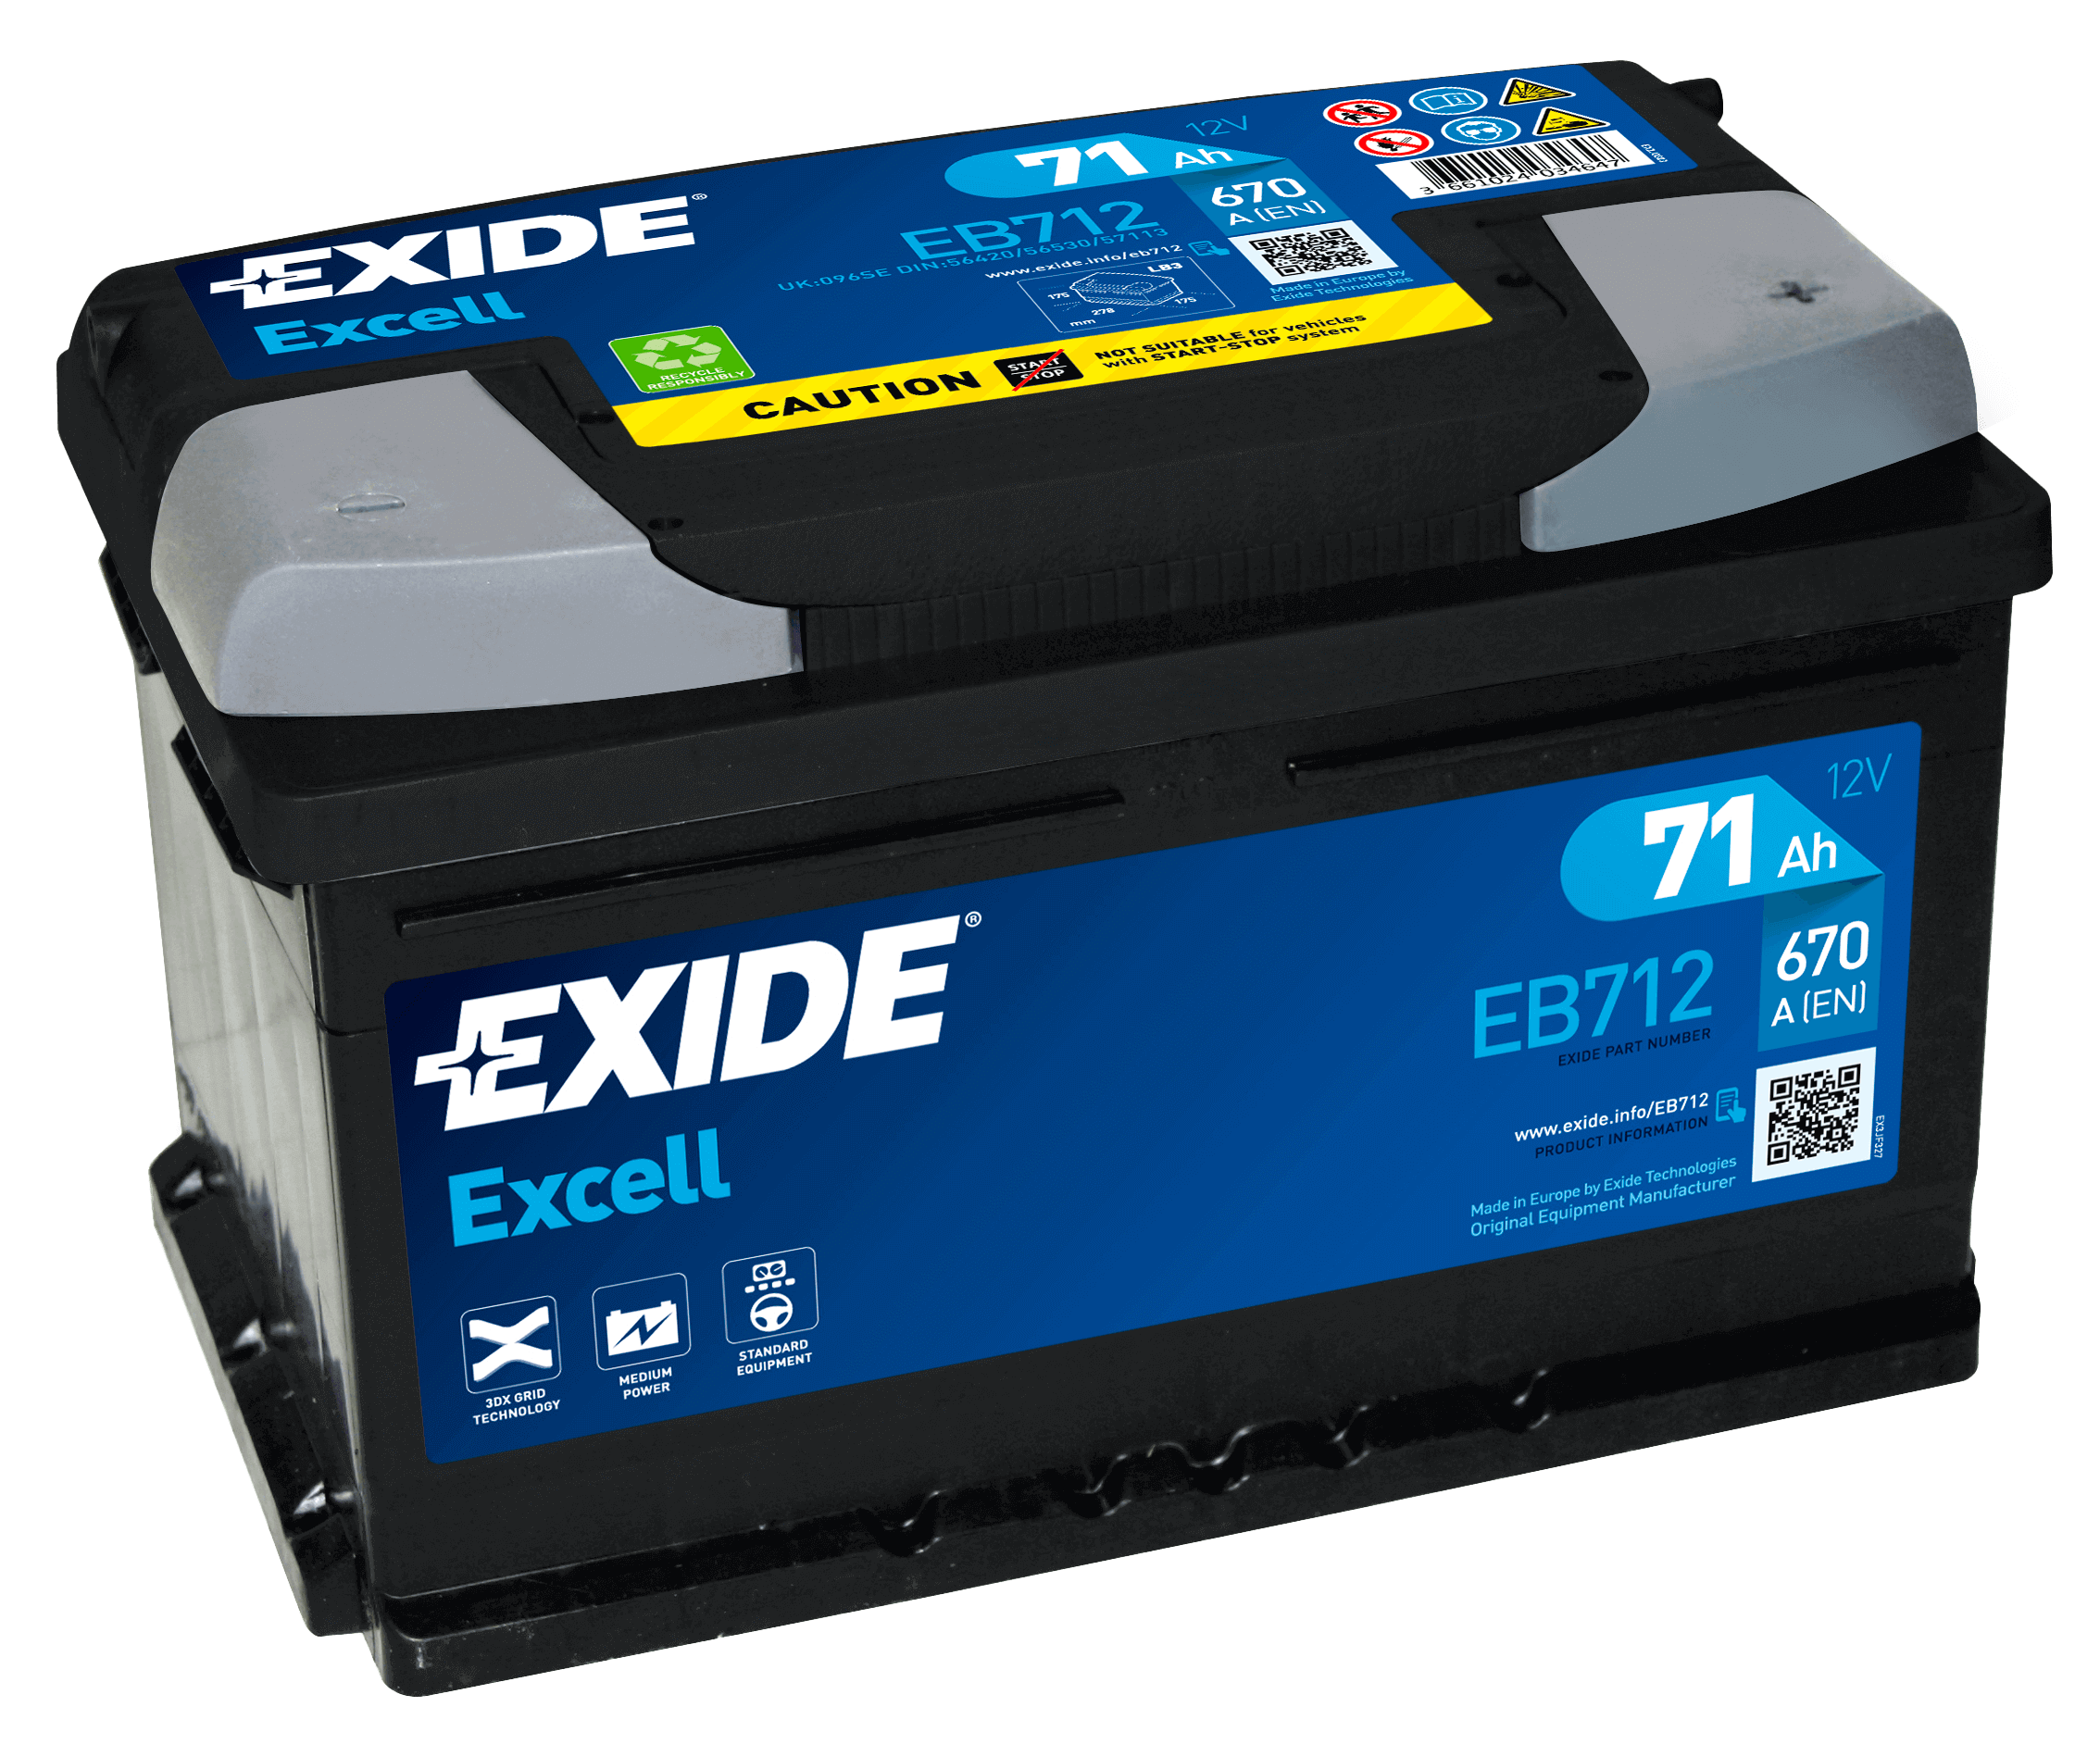 Exide EB712 Excell 12V 71Ah 670A Autobatterie, Starterbatterie, Boot, Batterien für